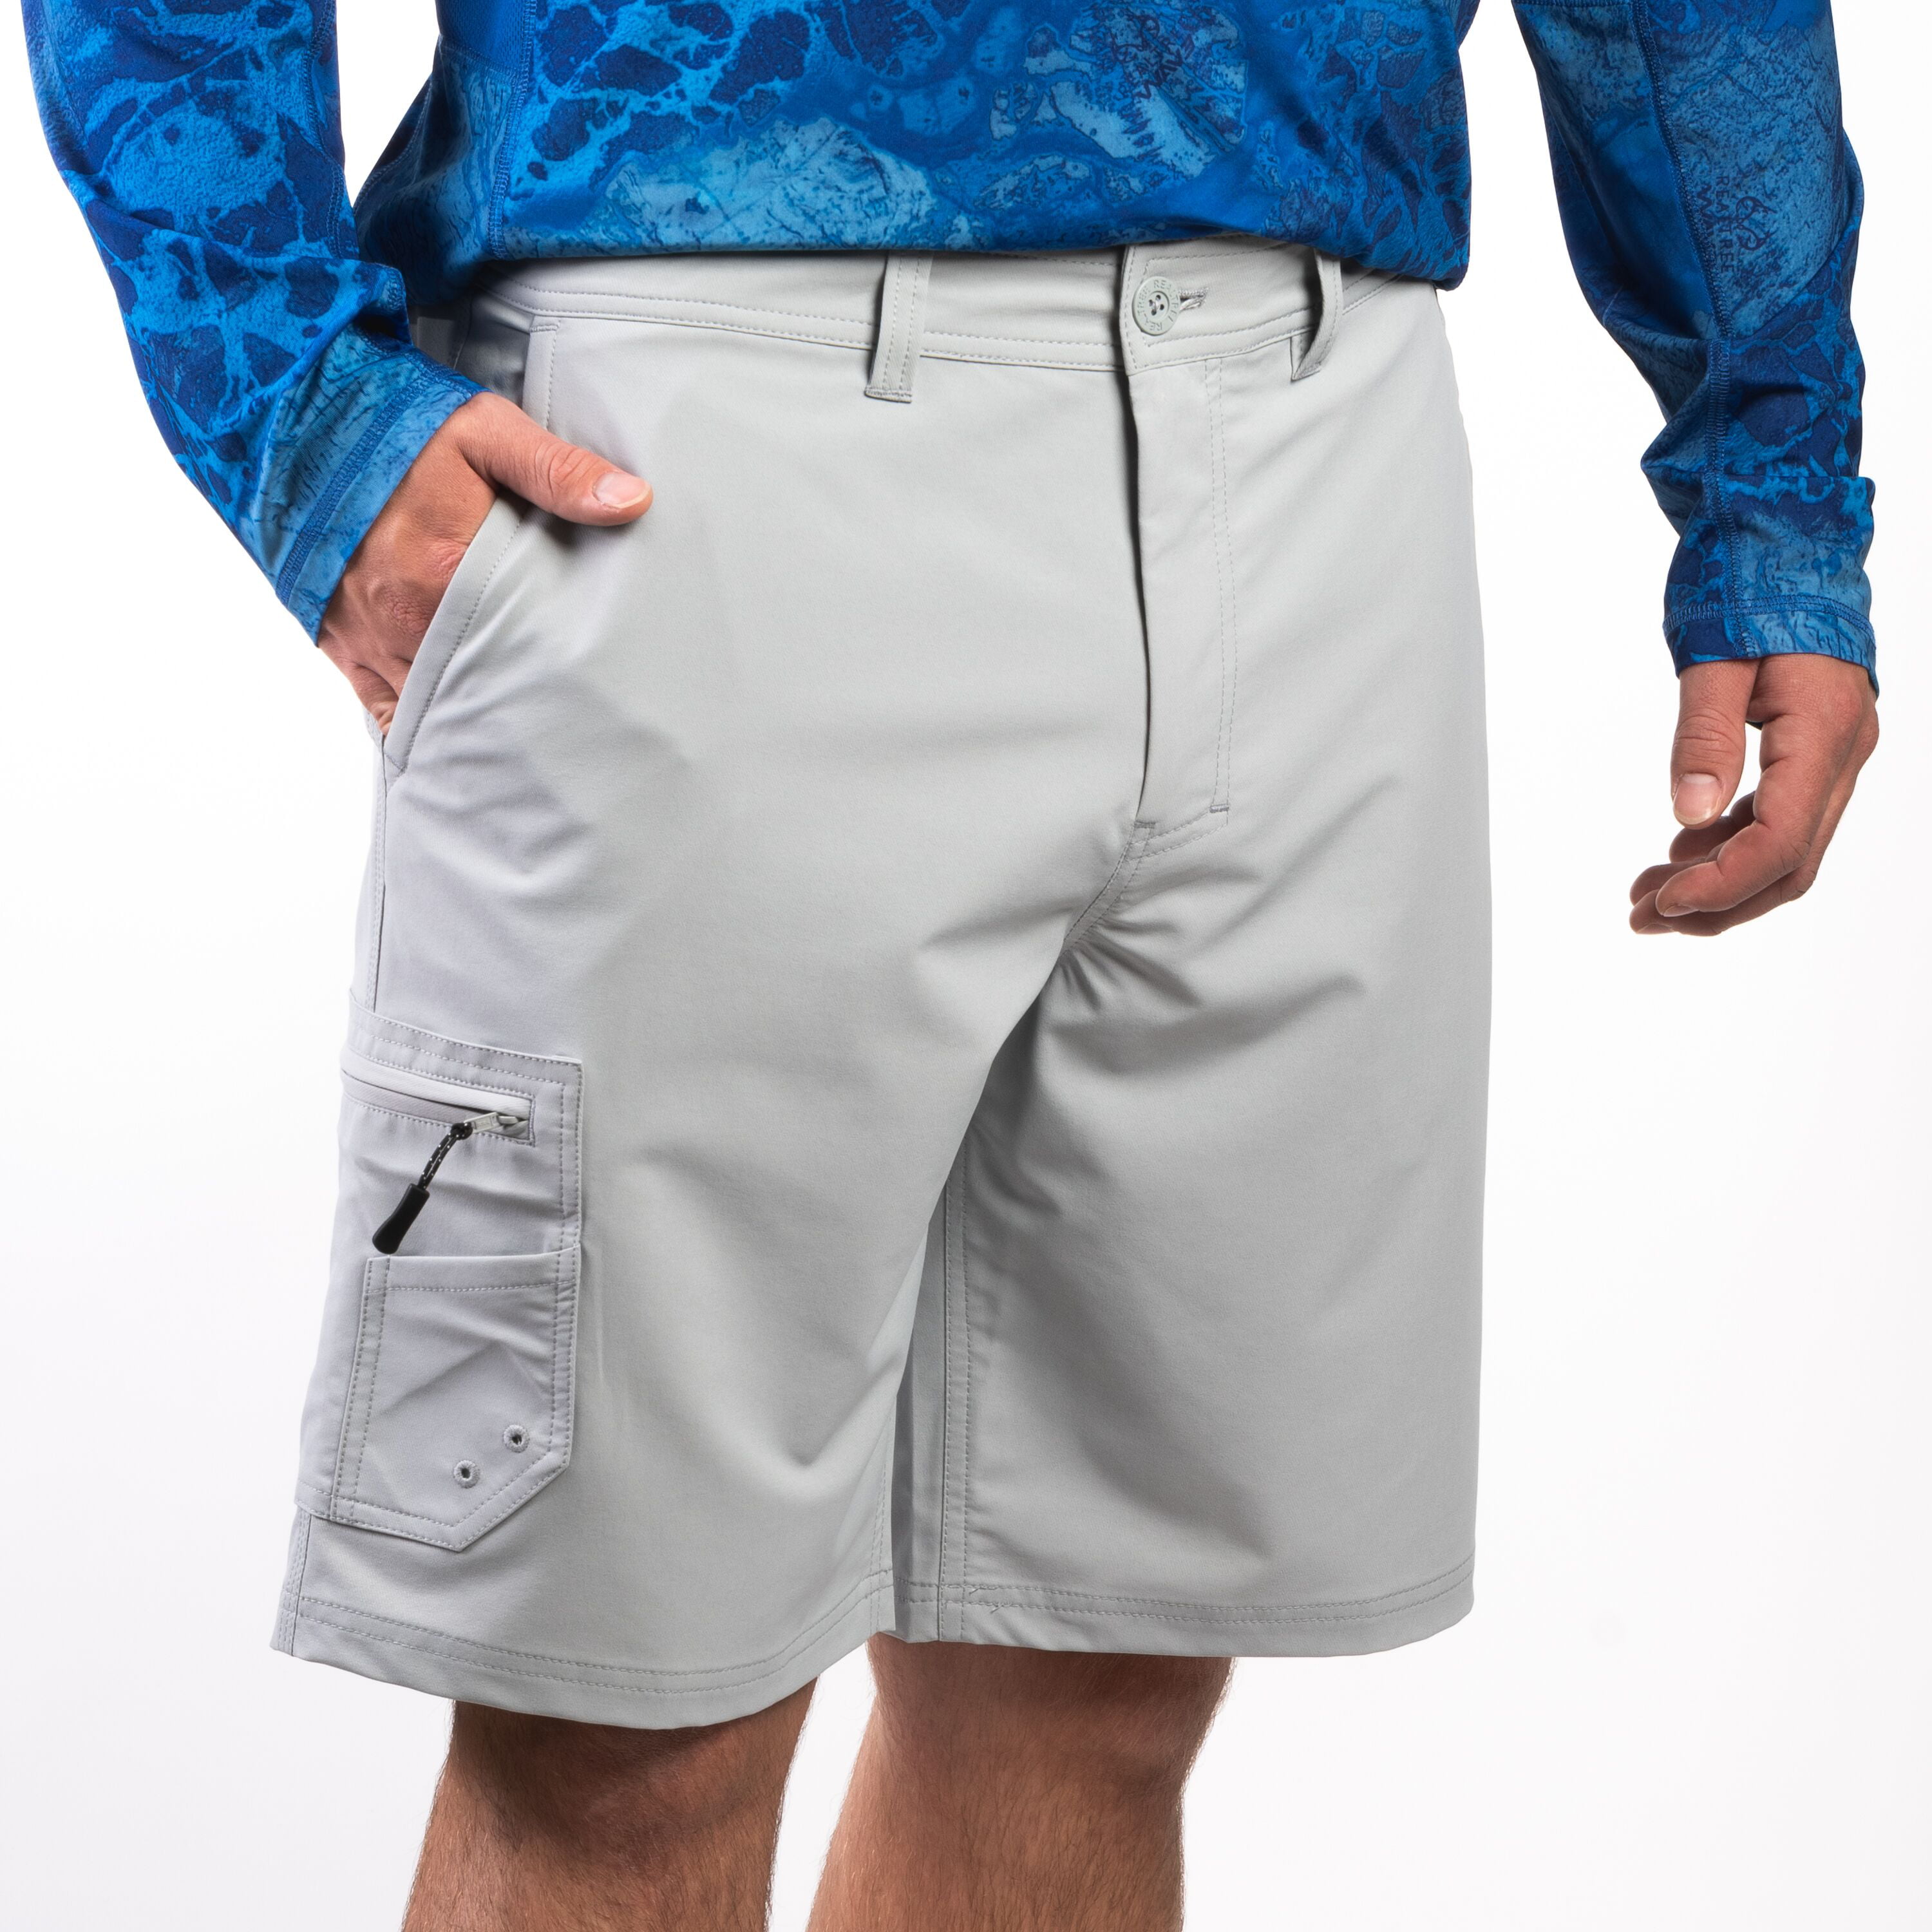 Realtree Men's Performance Hybrid Fishing Shorts